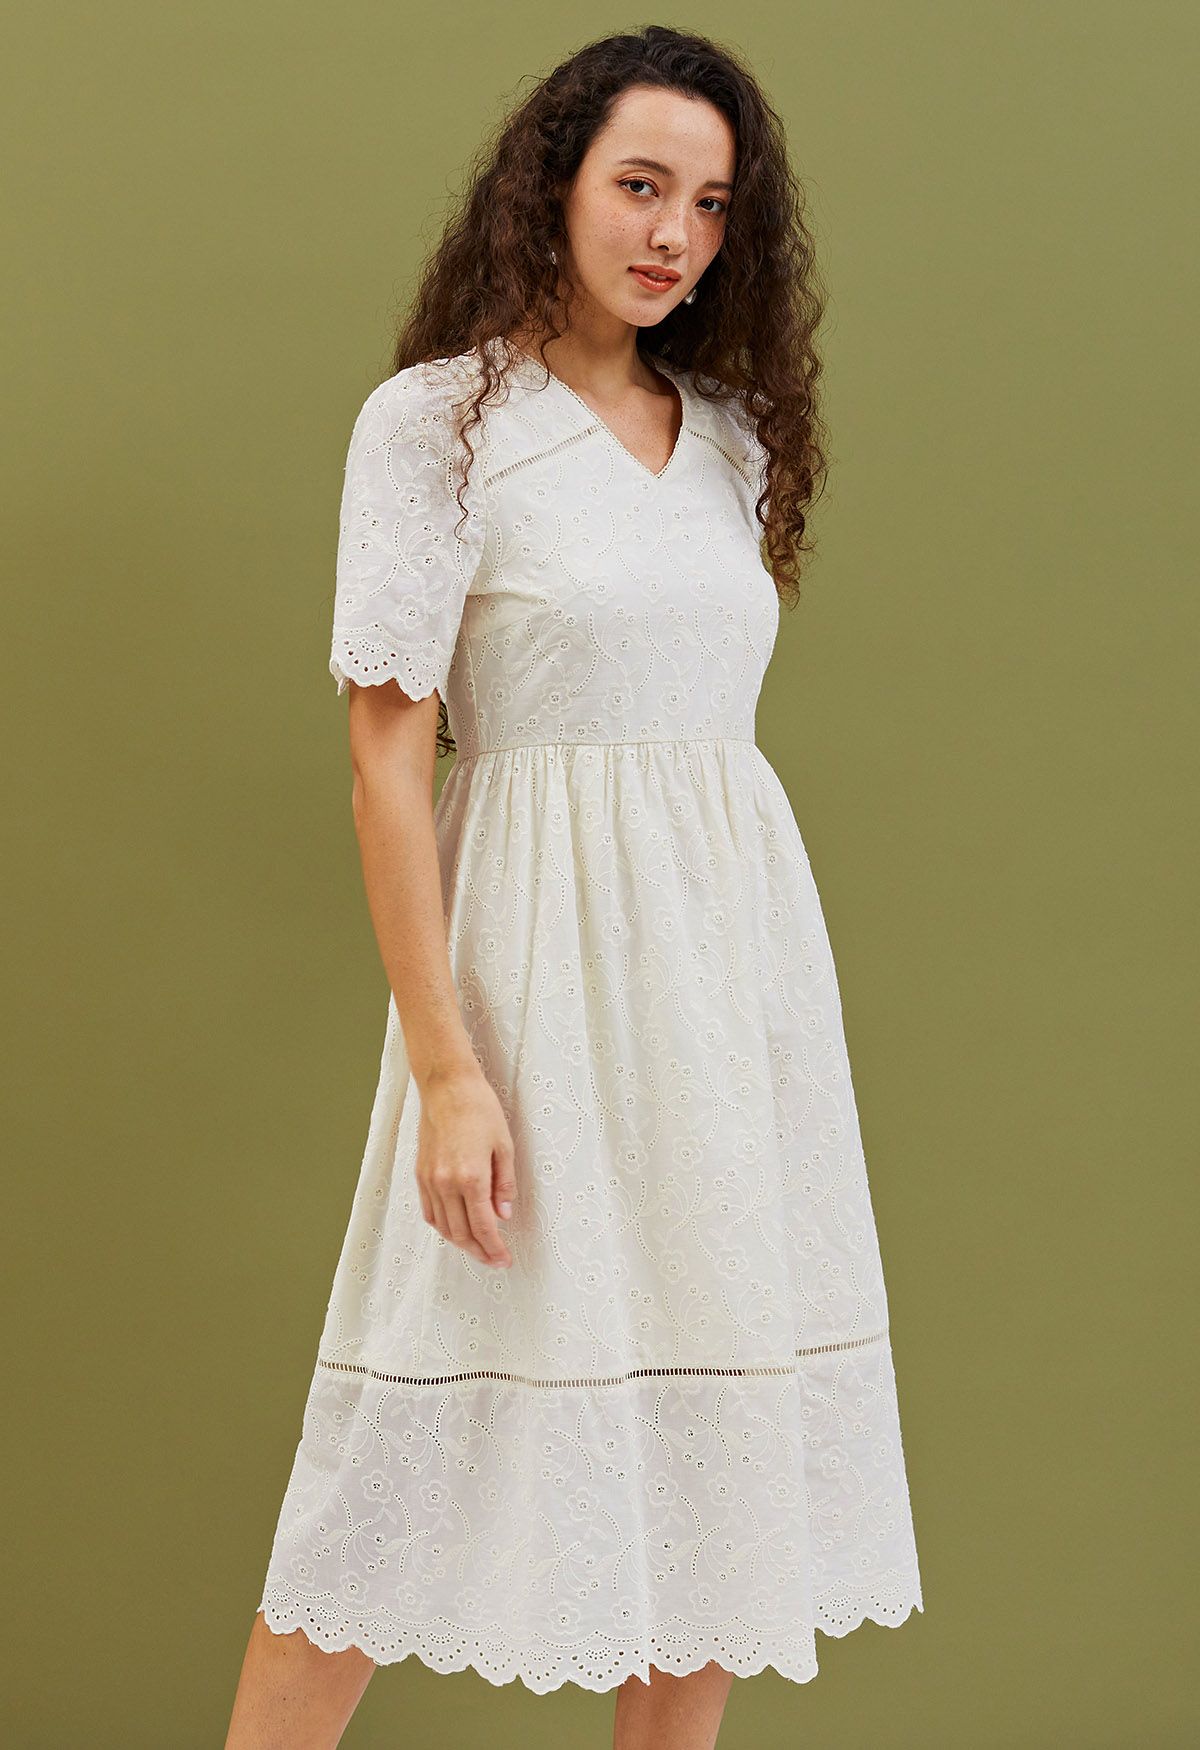 Elegant Women White Lace Dress Puff Sleeve Embroidery Pencil Dress